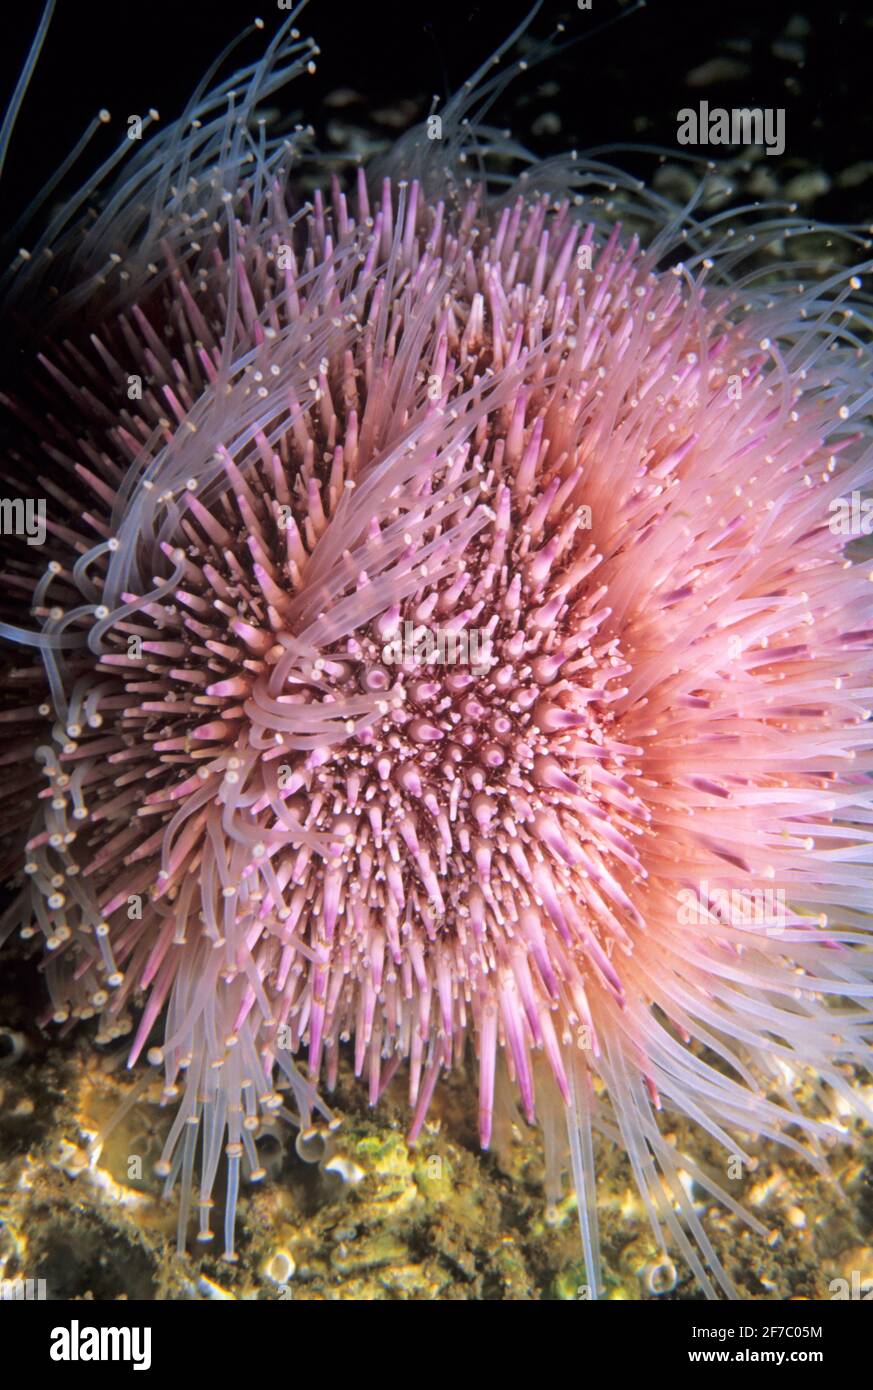 Common or edible sea urchin (Echinus esculentus) closeup showing extended  tube feet, UK Stock Photo - Alamy